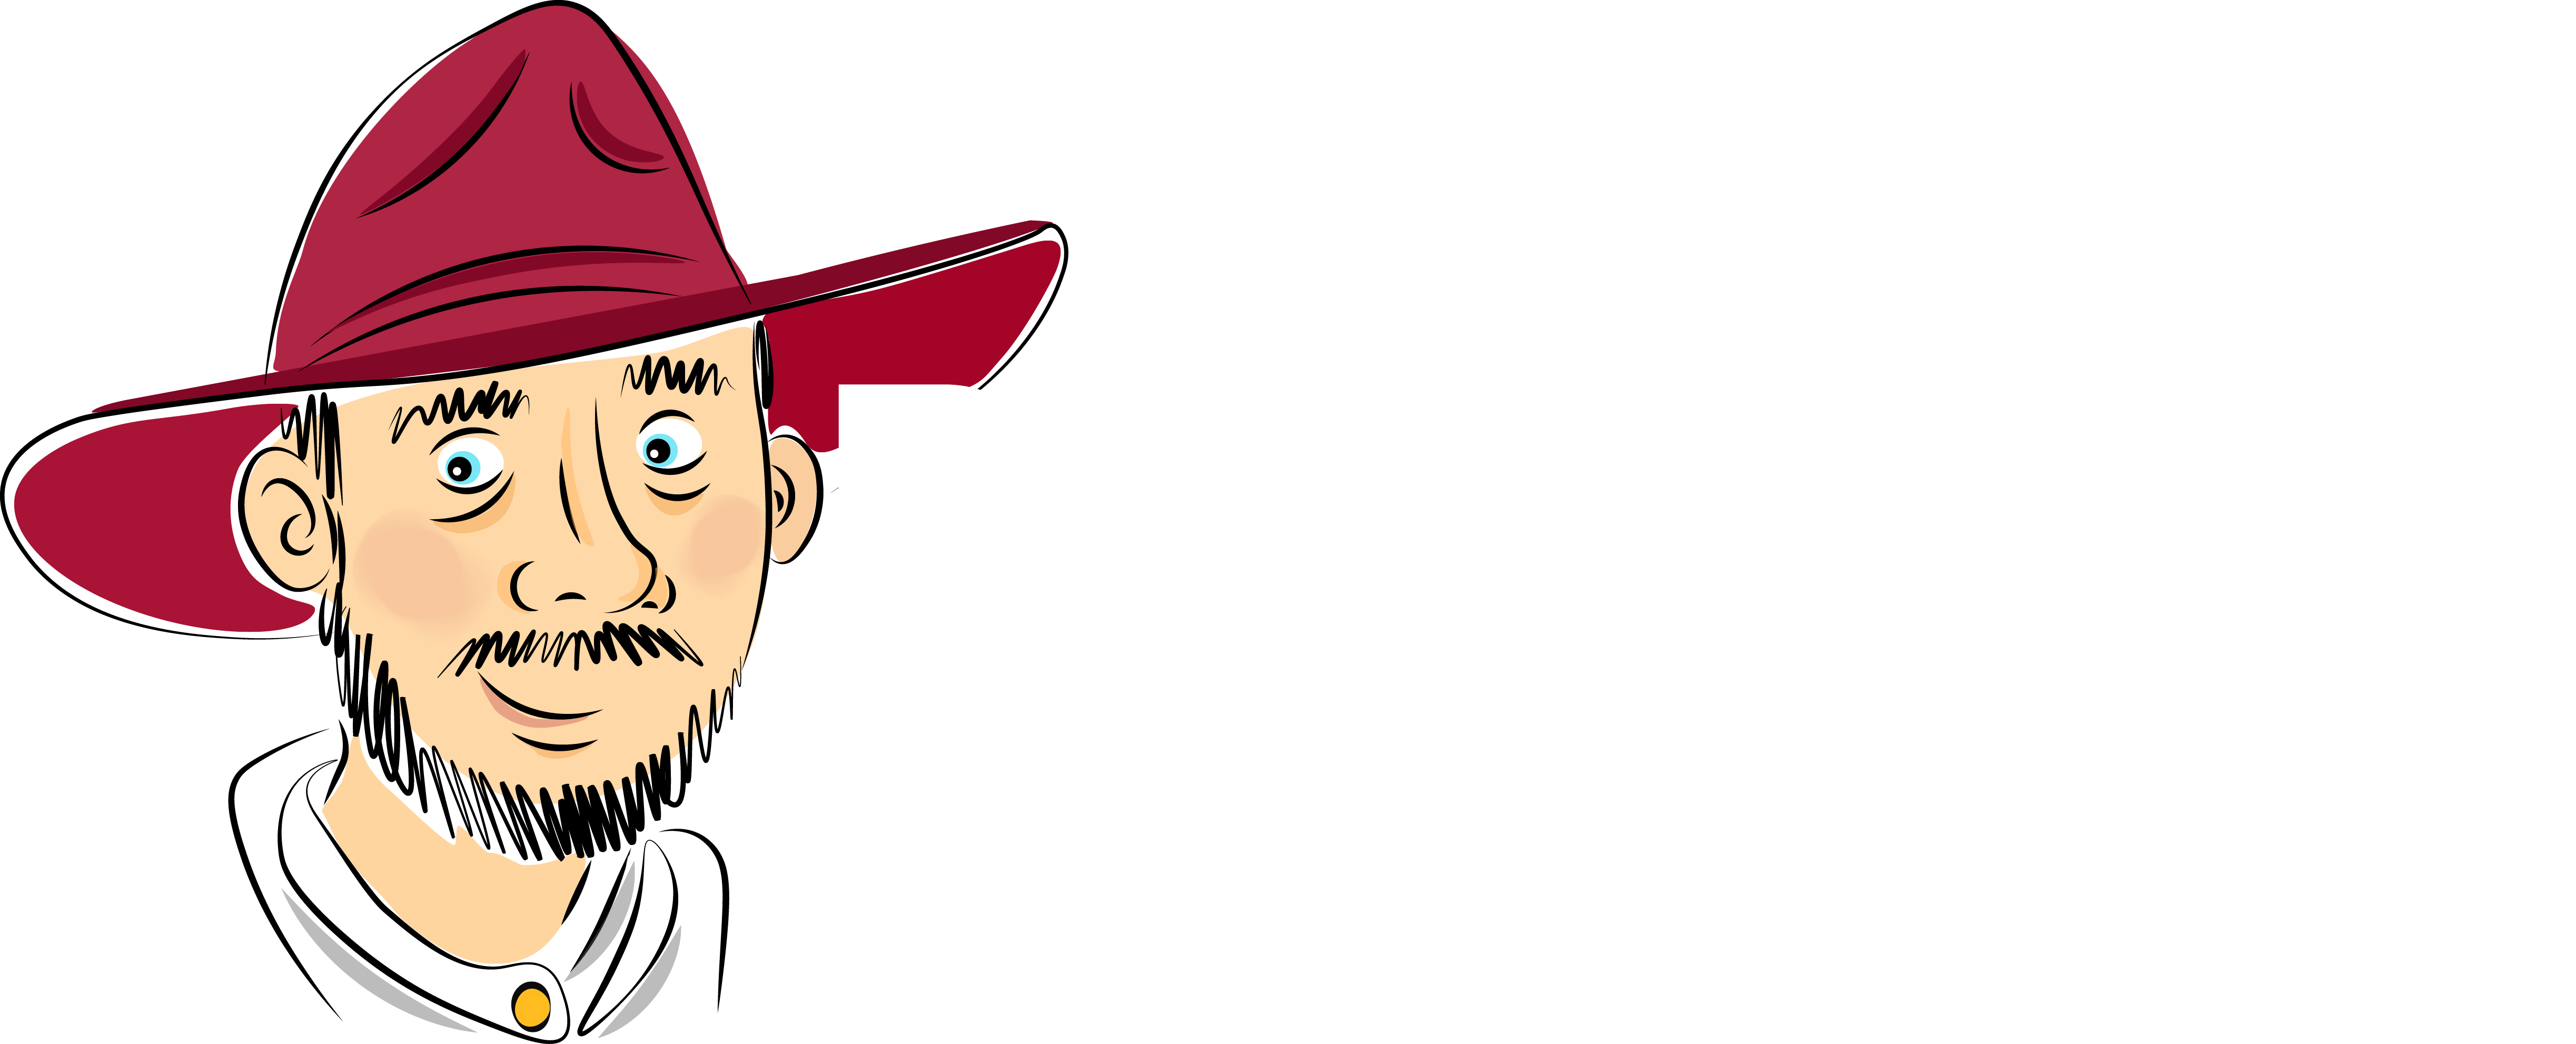 Billy Tong Logo In White